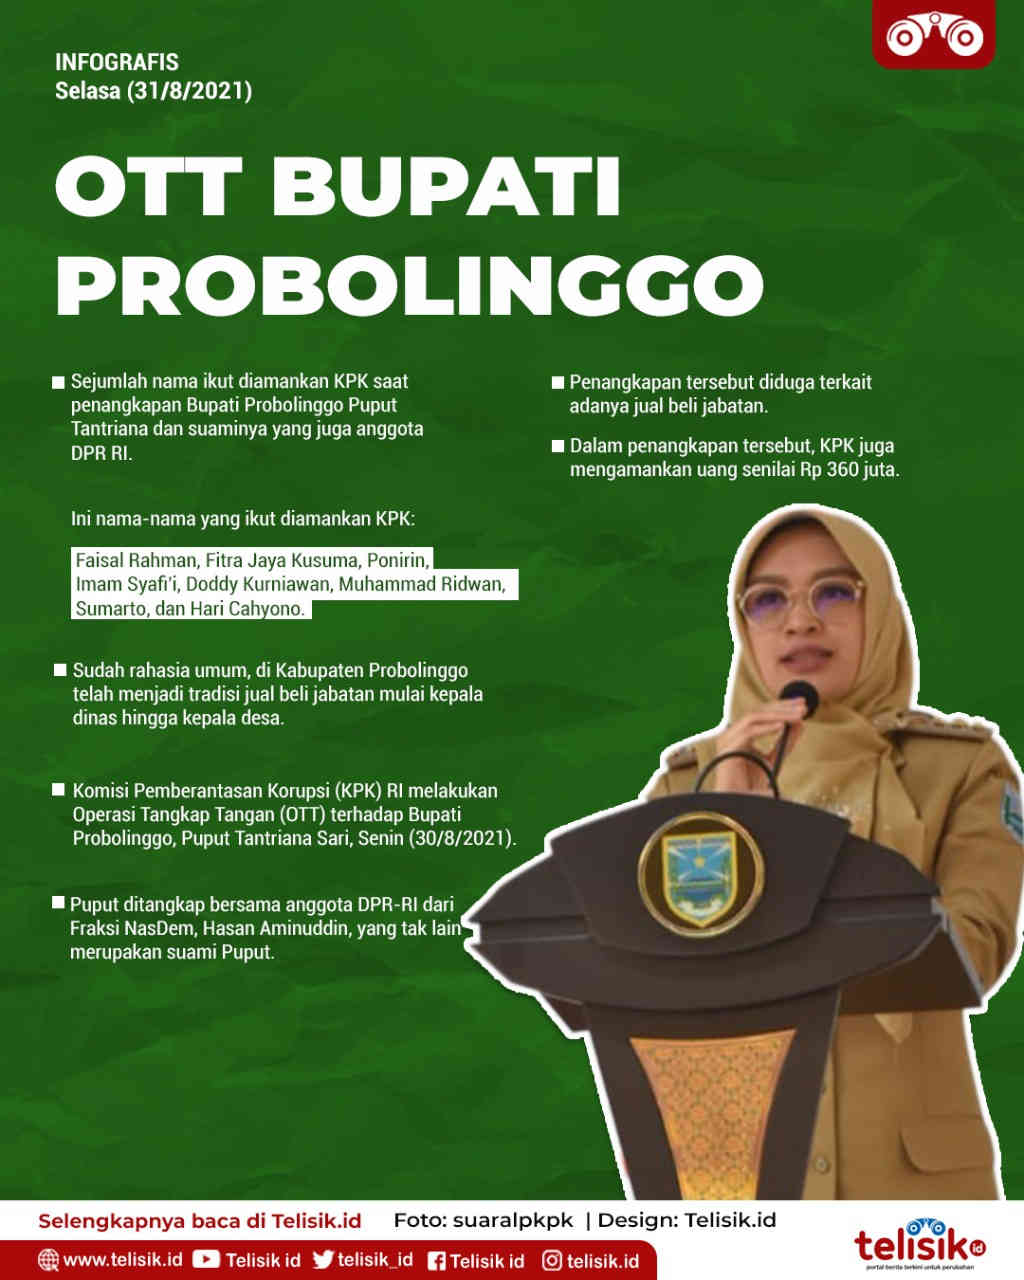 Infografis: OTT Bupati Probolinggo, Ini Nama-Nama yang Ikut Diamankan KPK